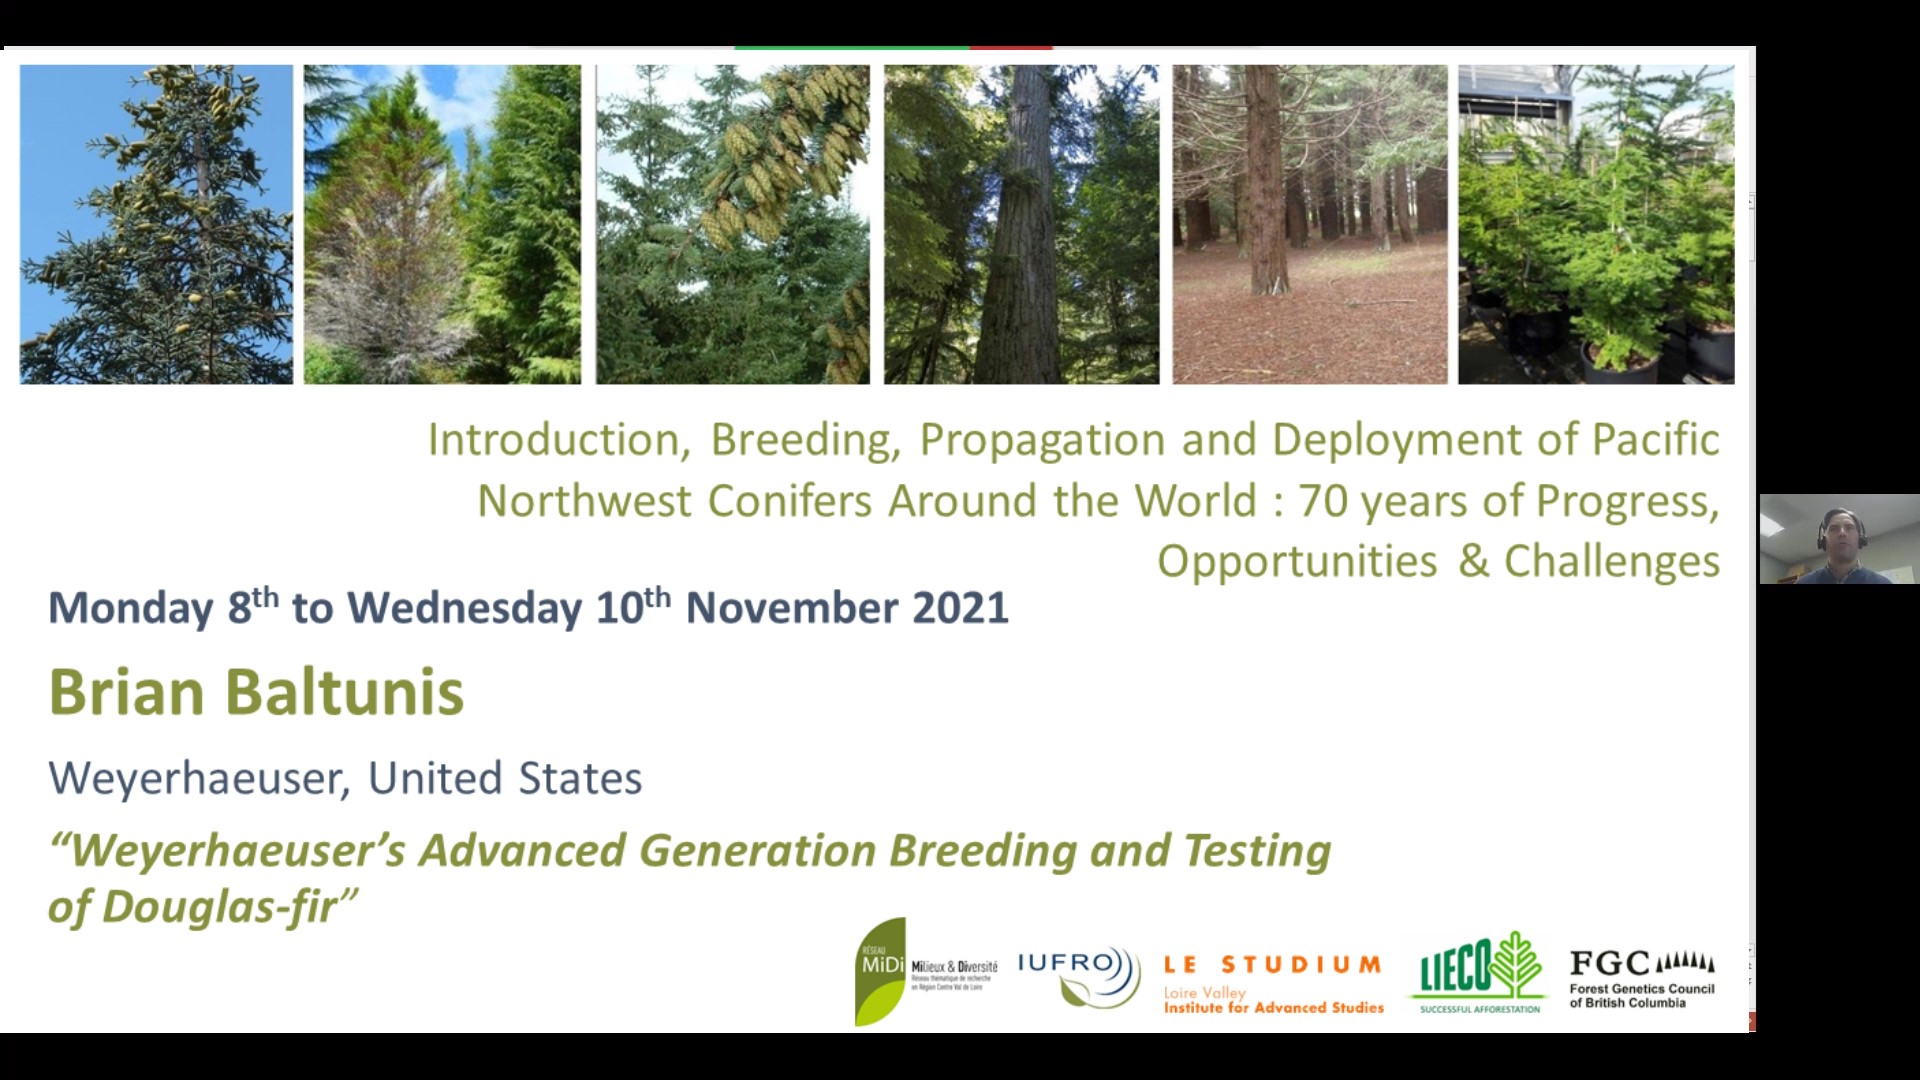 Weyerhaeuser's Advanced Generation Breeding and Testing of Douglas-fir - Brian Baltunis